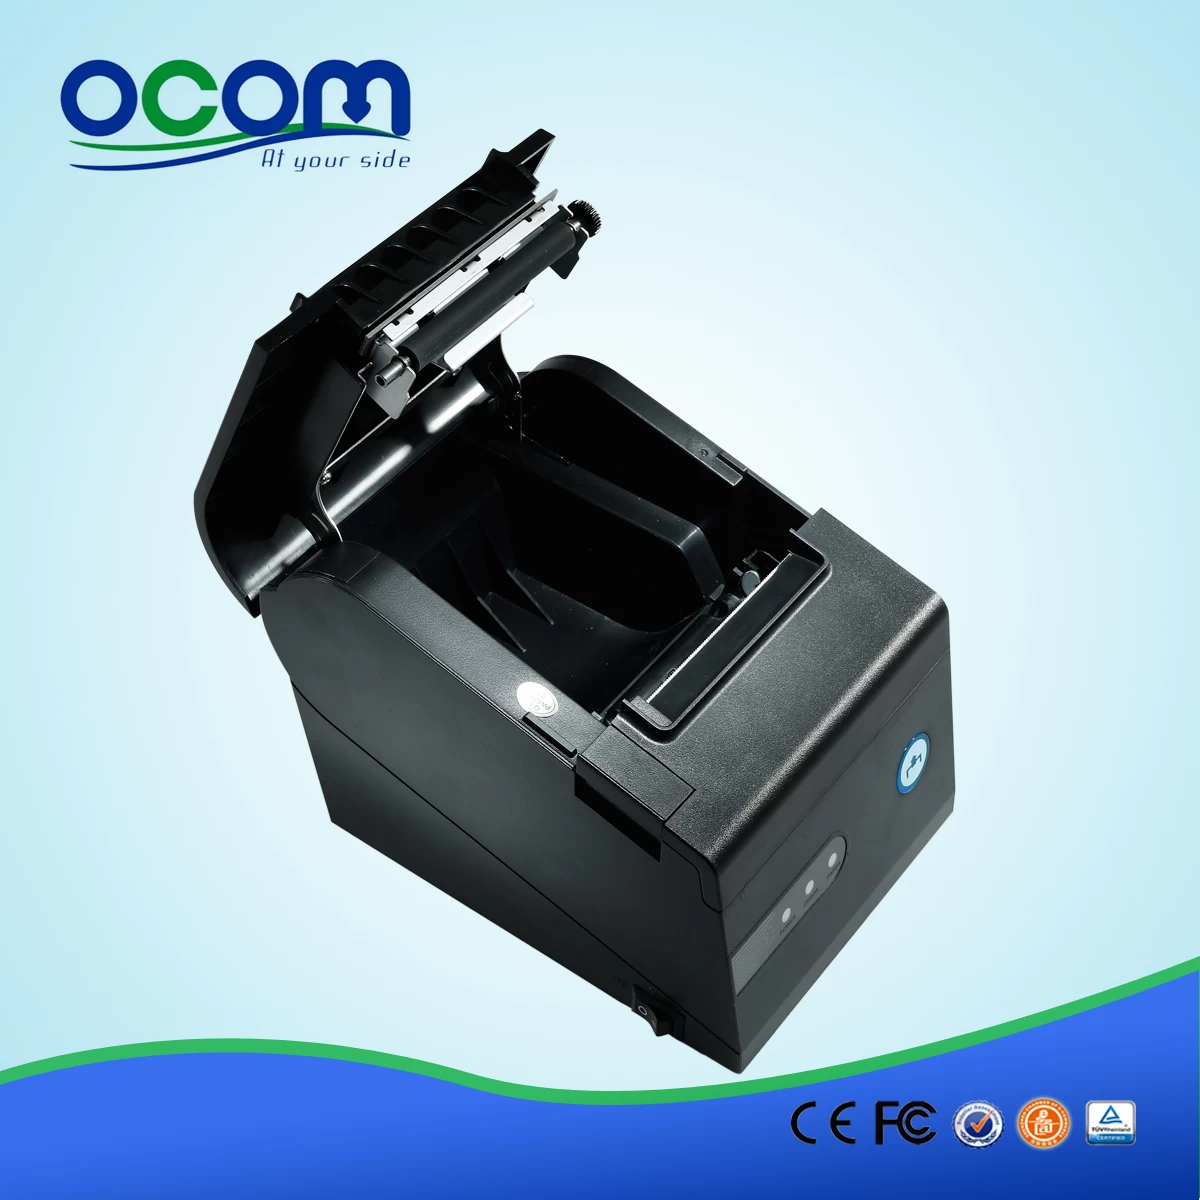 China 80mm Receipt Printer POS Thermal Printer Manufacturers